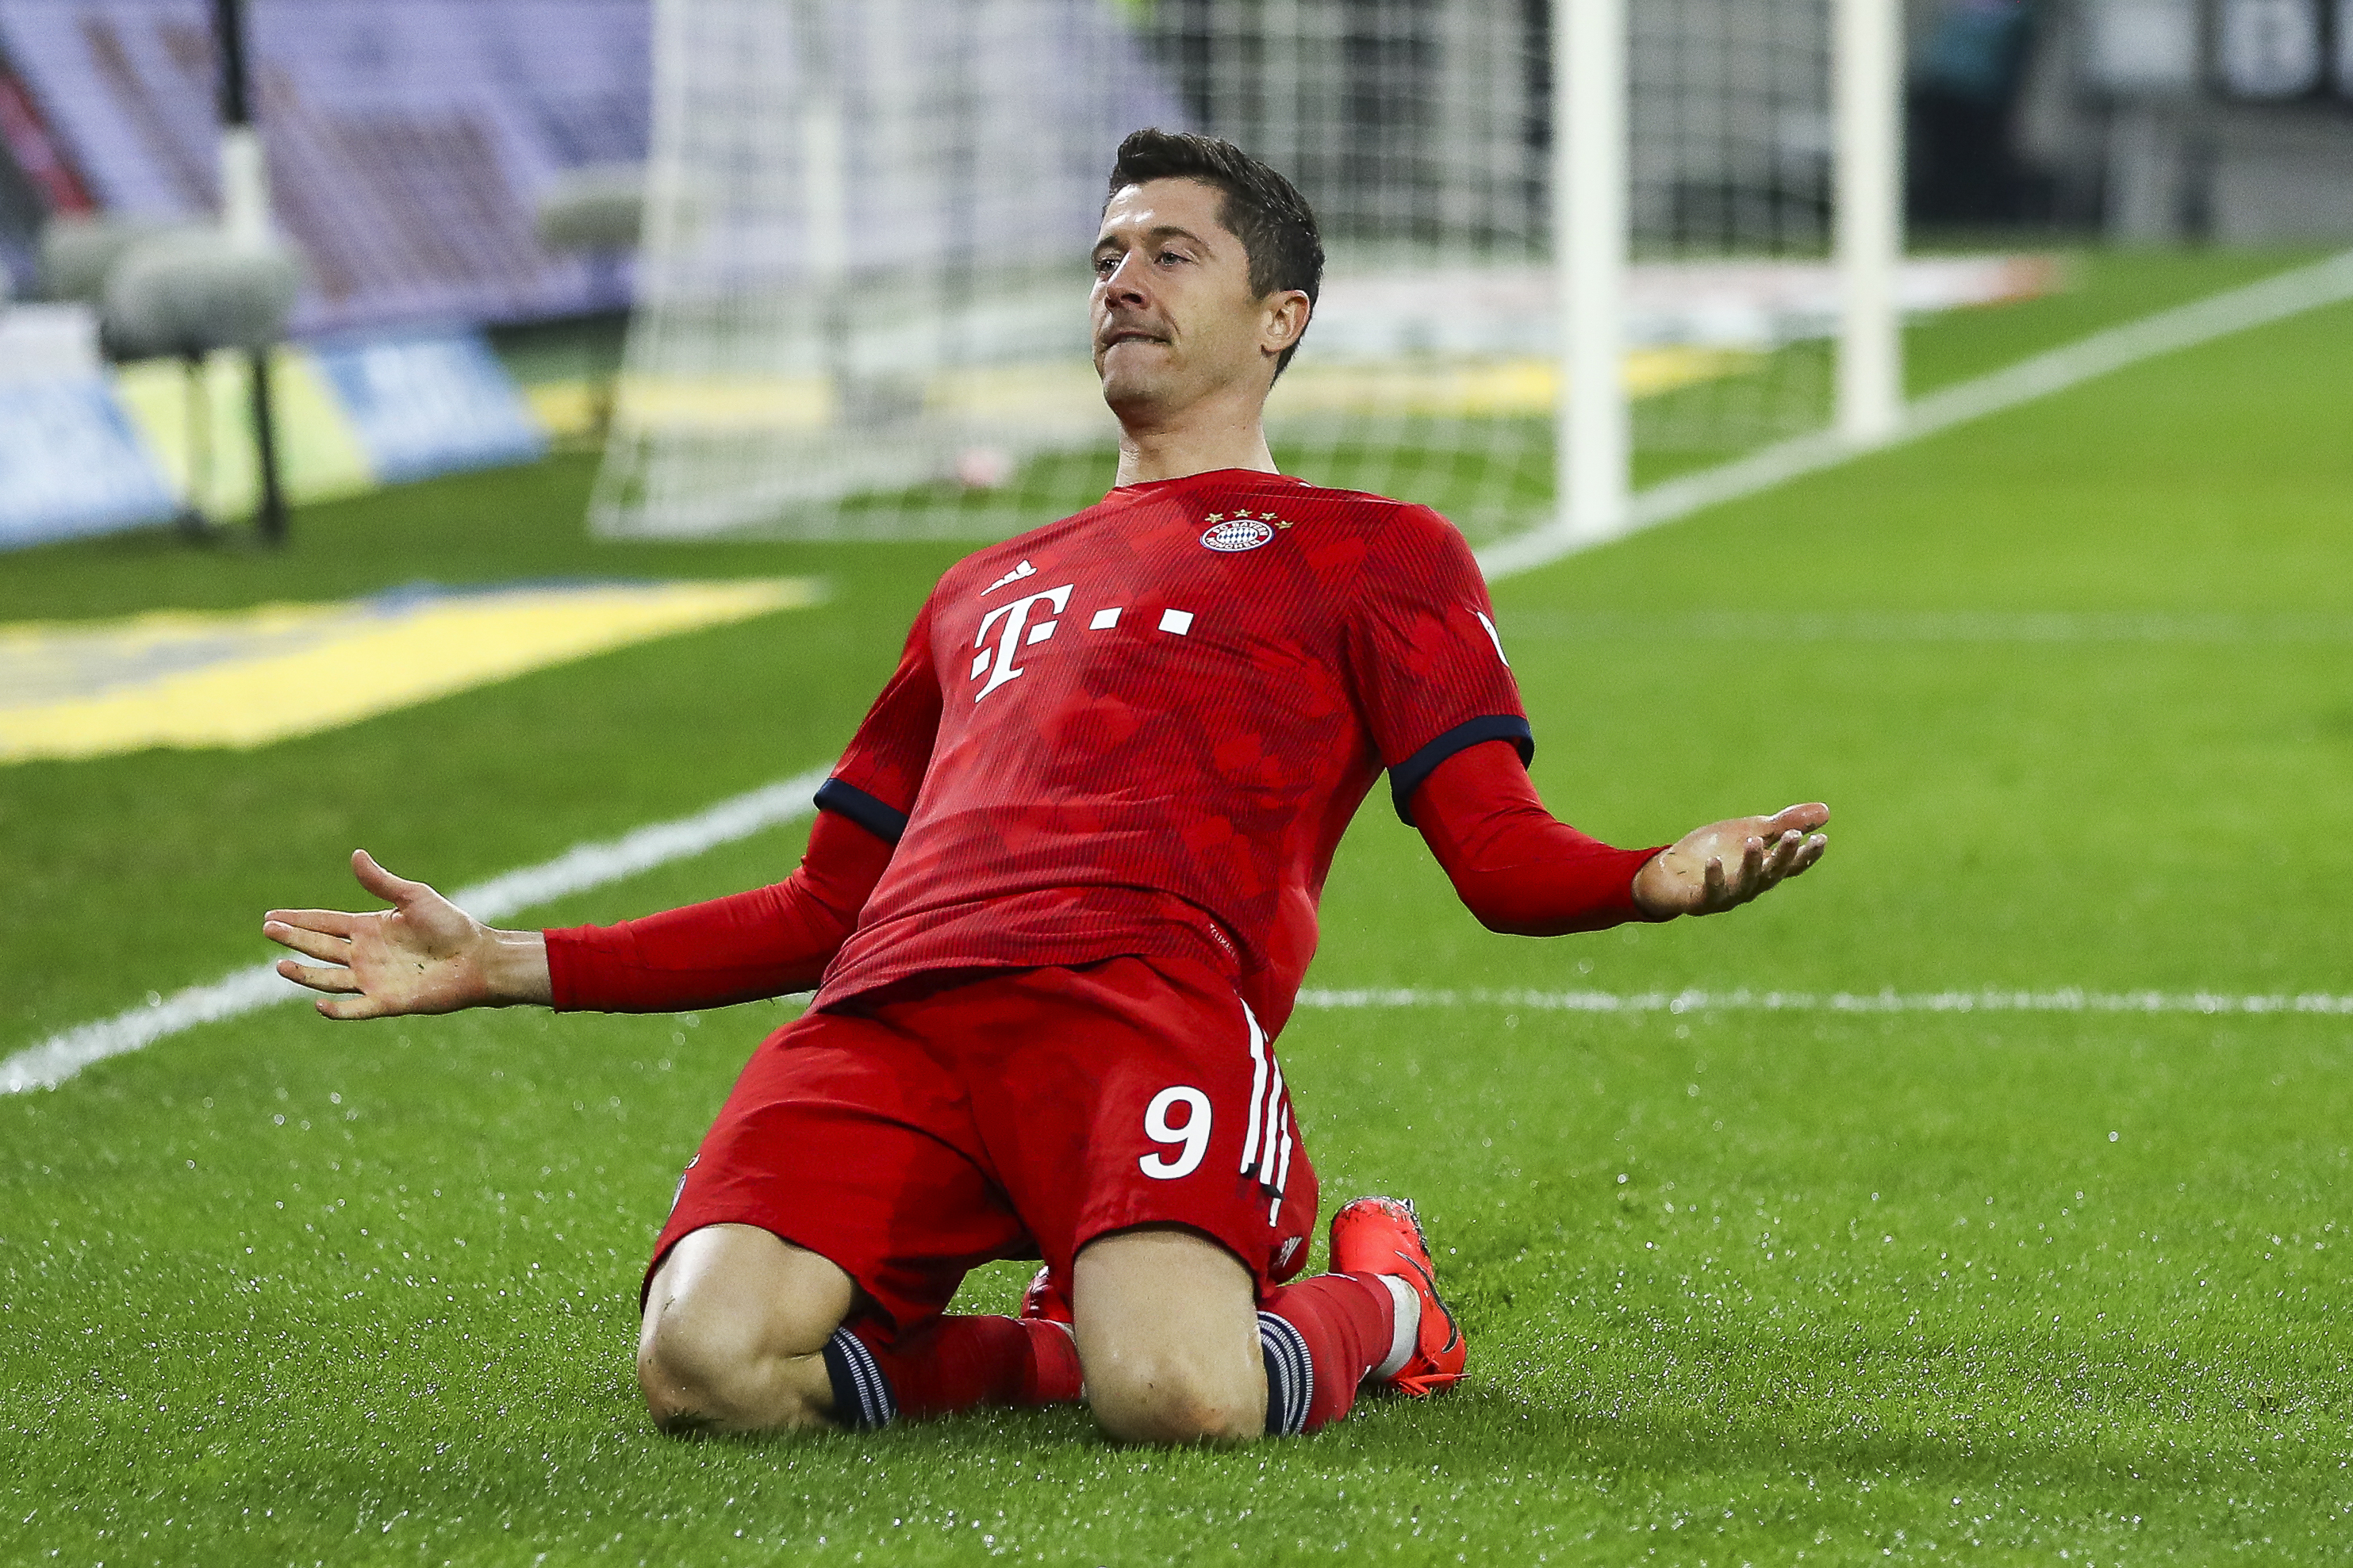 Lewandowski headed to England next year? (Photo by Maja Hitij/Bongarts/Getty Images)